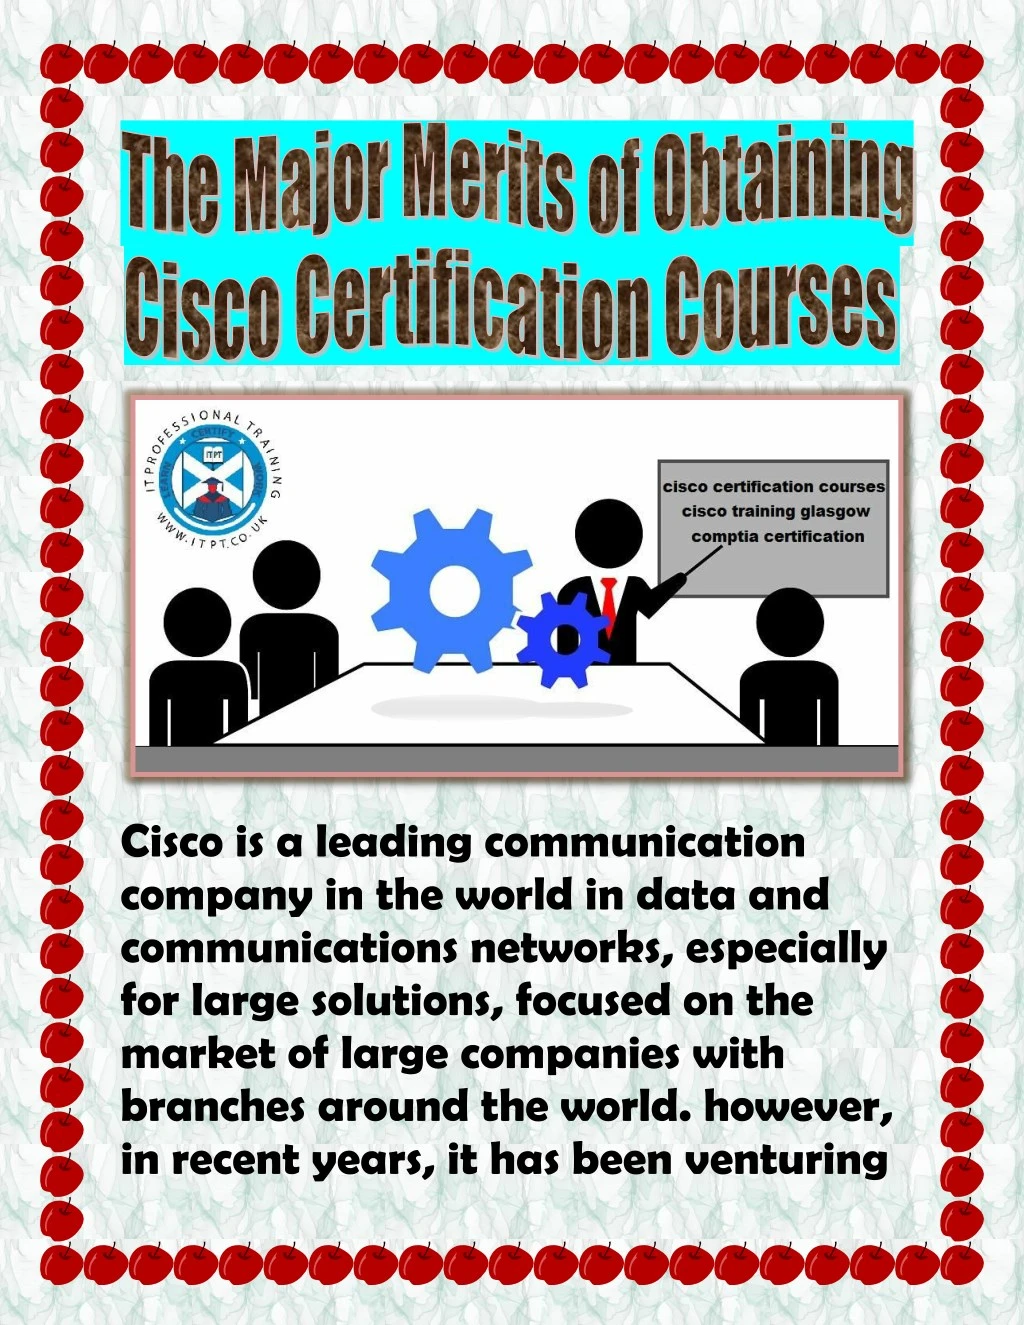 cisco is a leading communication company